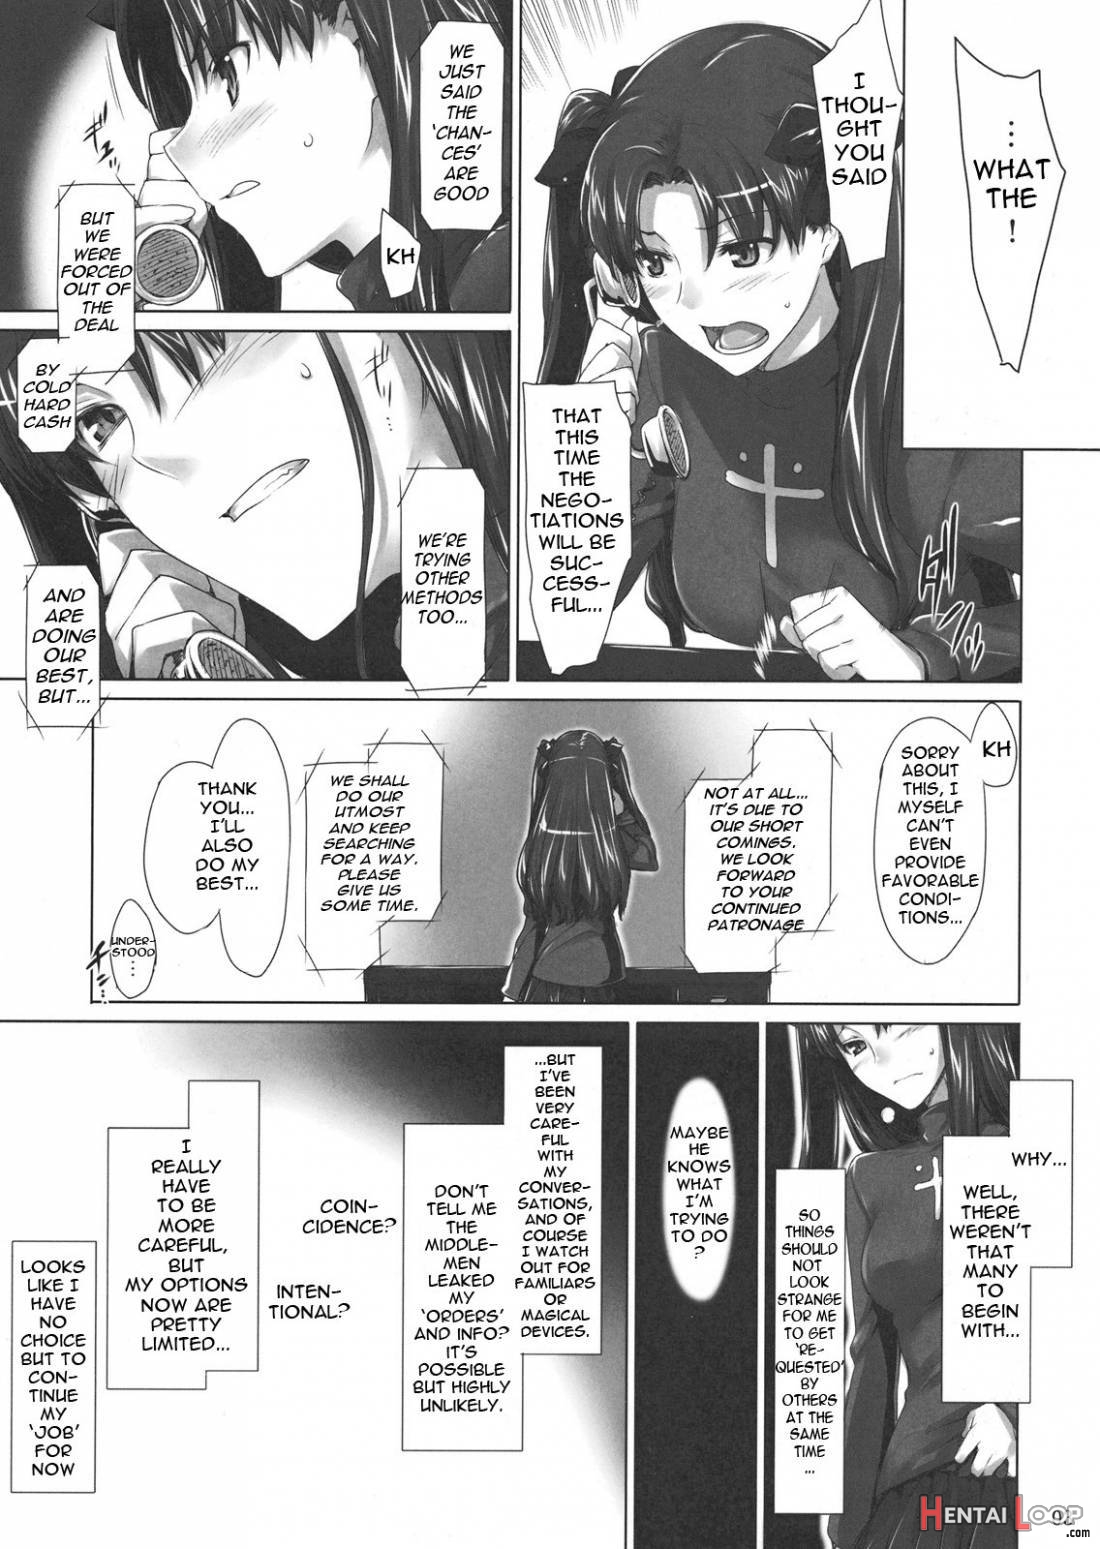 Tohsaka-ke no Kakei Jijou 7 page 2